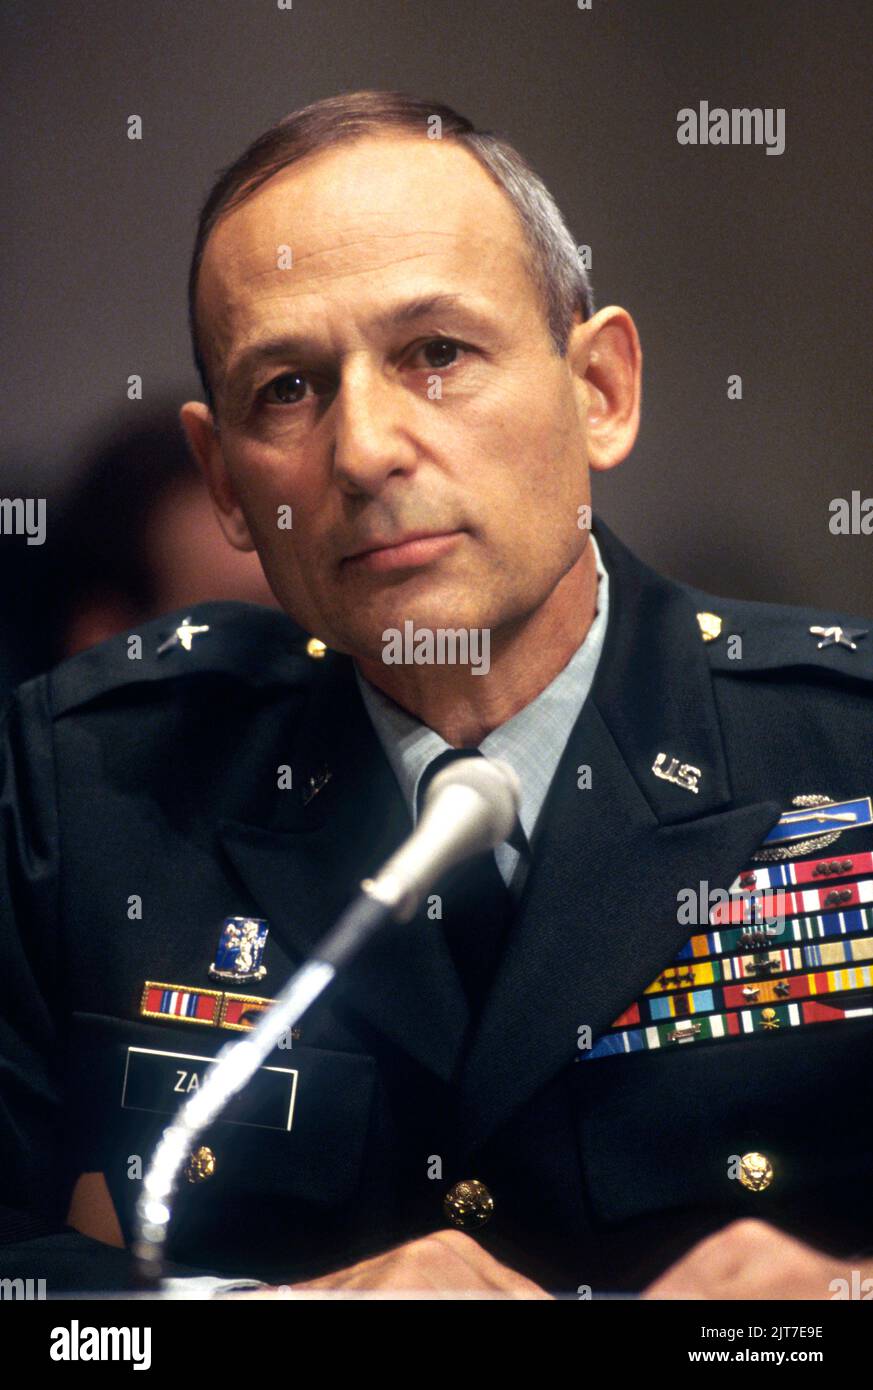 U.S. Army Brigadier Gen. Daniel R. Zanini, testifies on Gulf War illness before the Senate Armed Services Committee on Capitol Hill, February 27, 1997 in Washington, D.C. Stock Photo